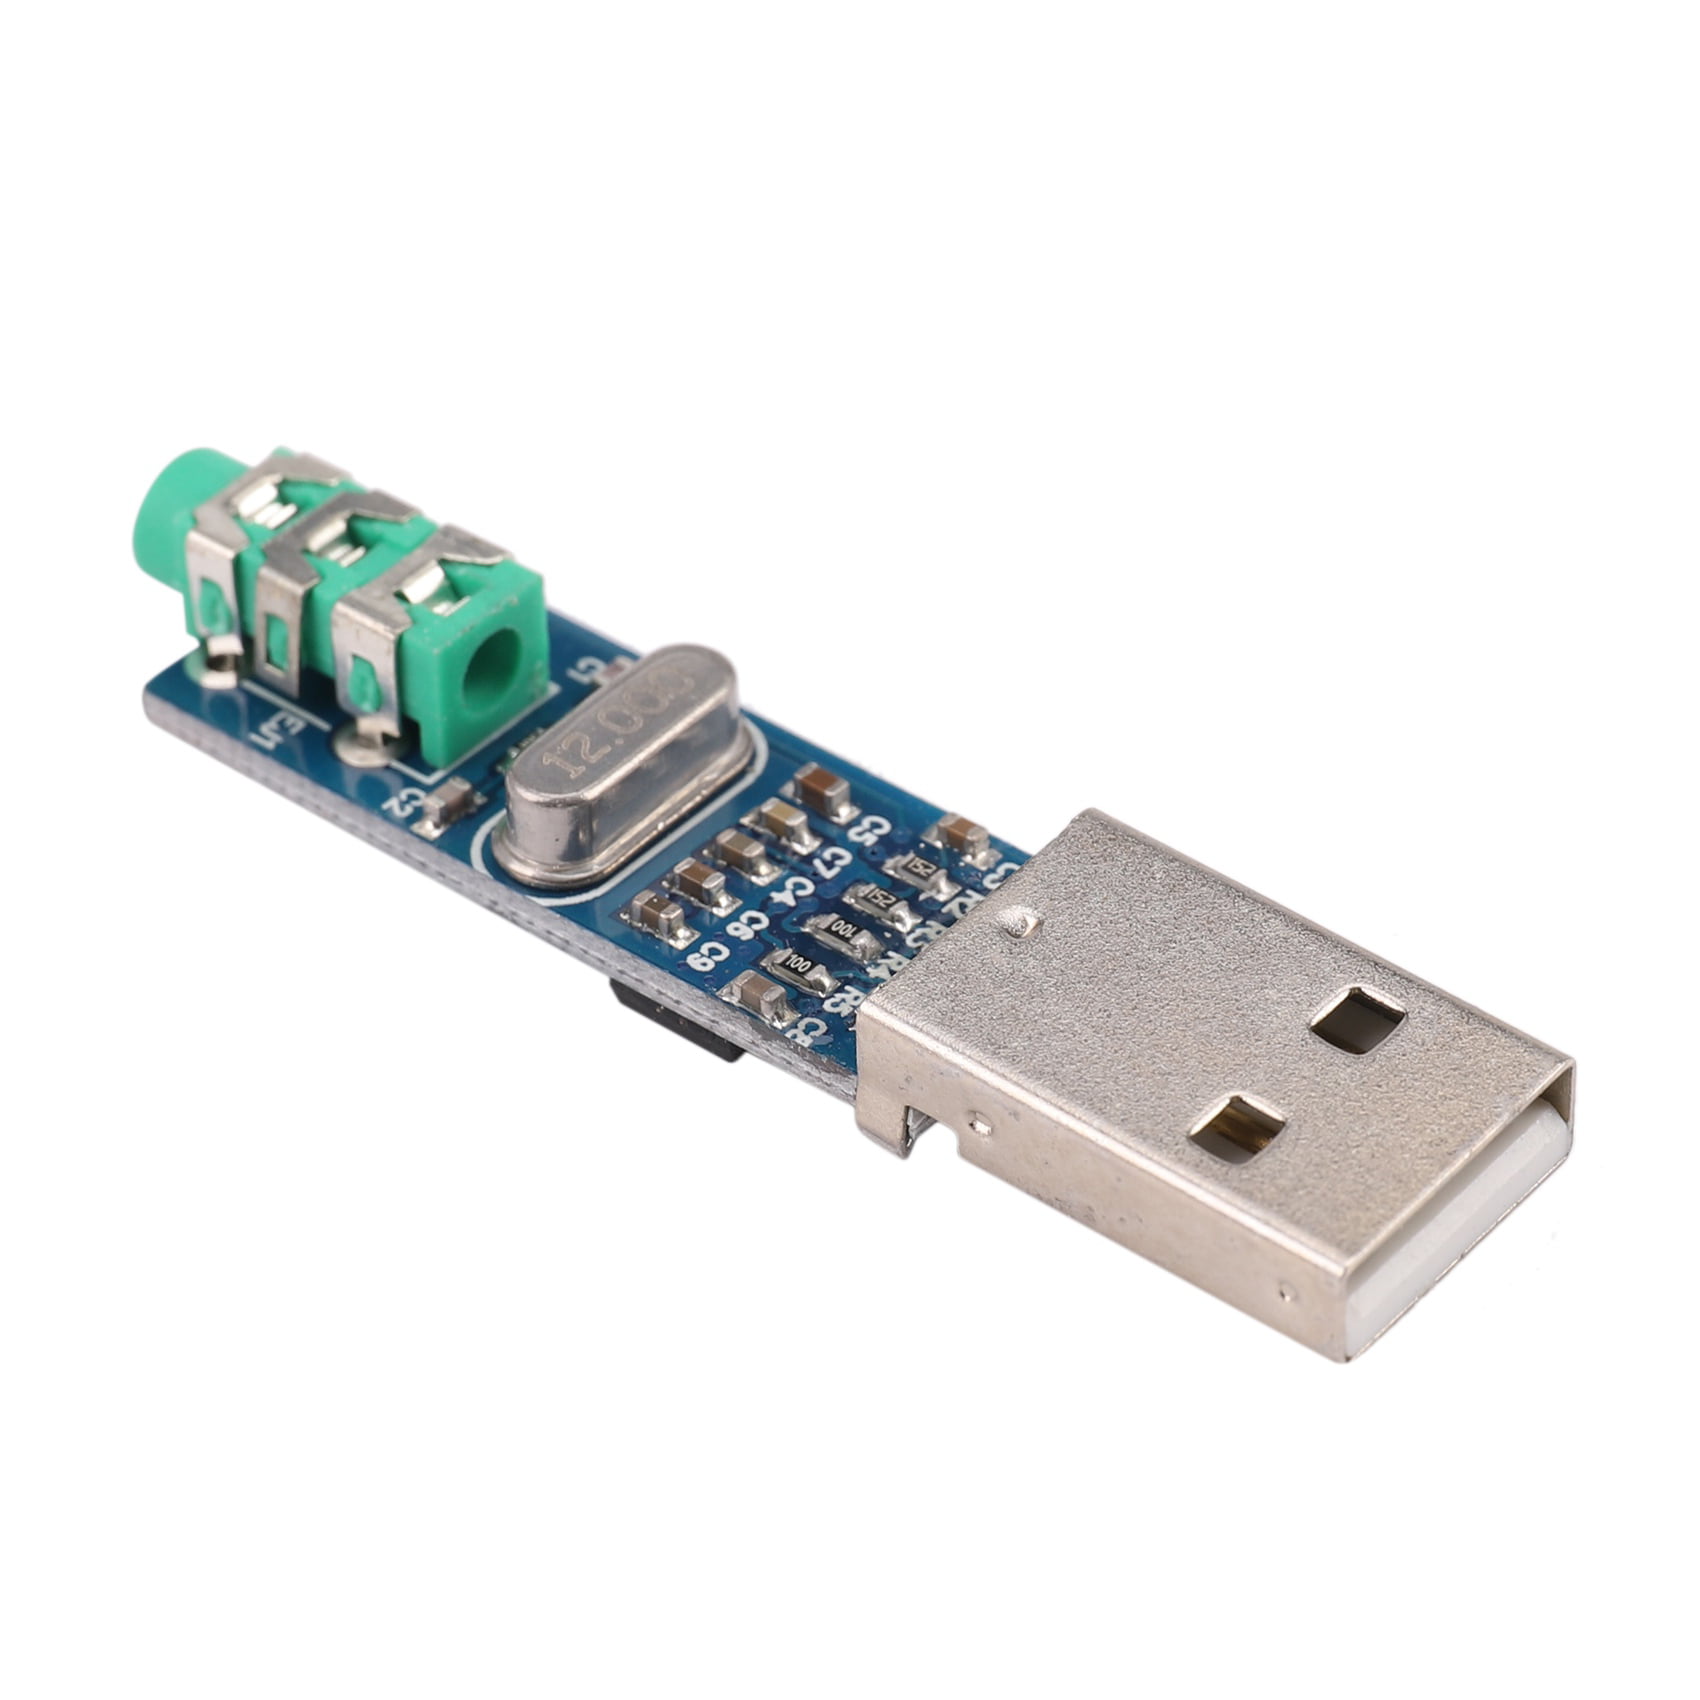 5V USB Powered PCM2704 MINI USB Sound Card DAC Decoder Board for PC Computer US 